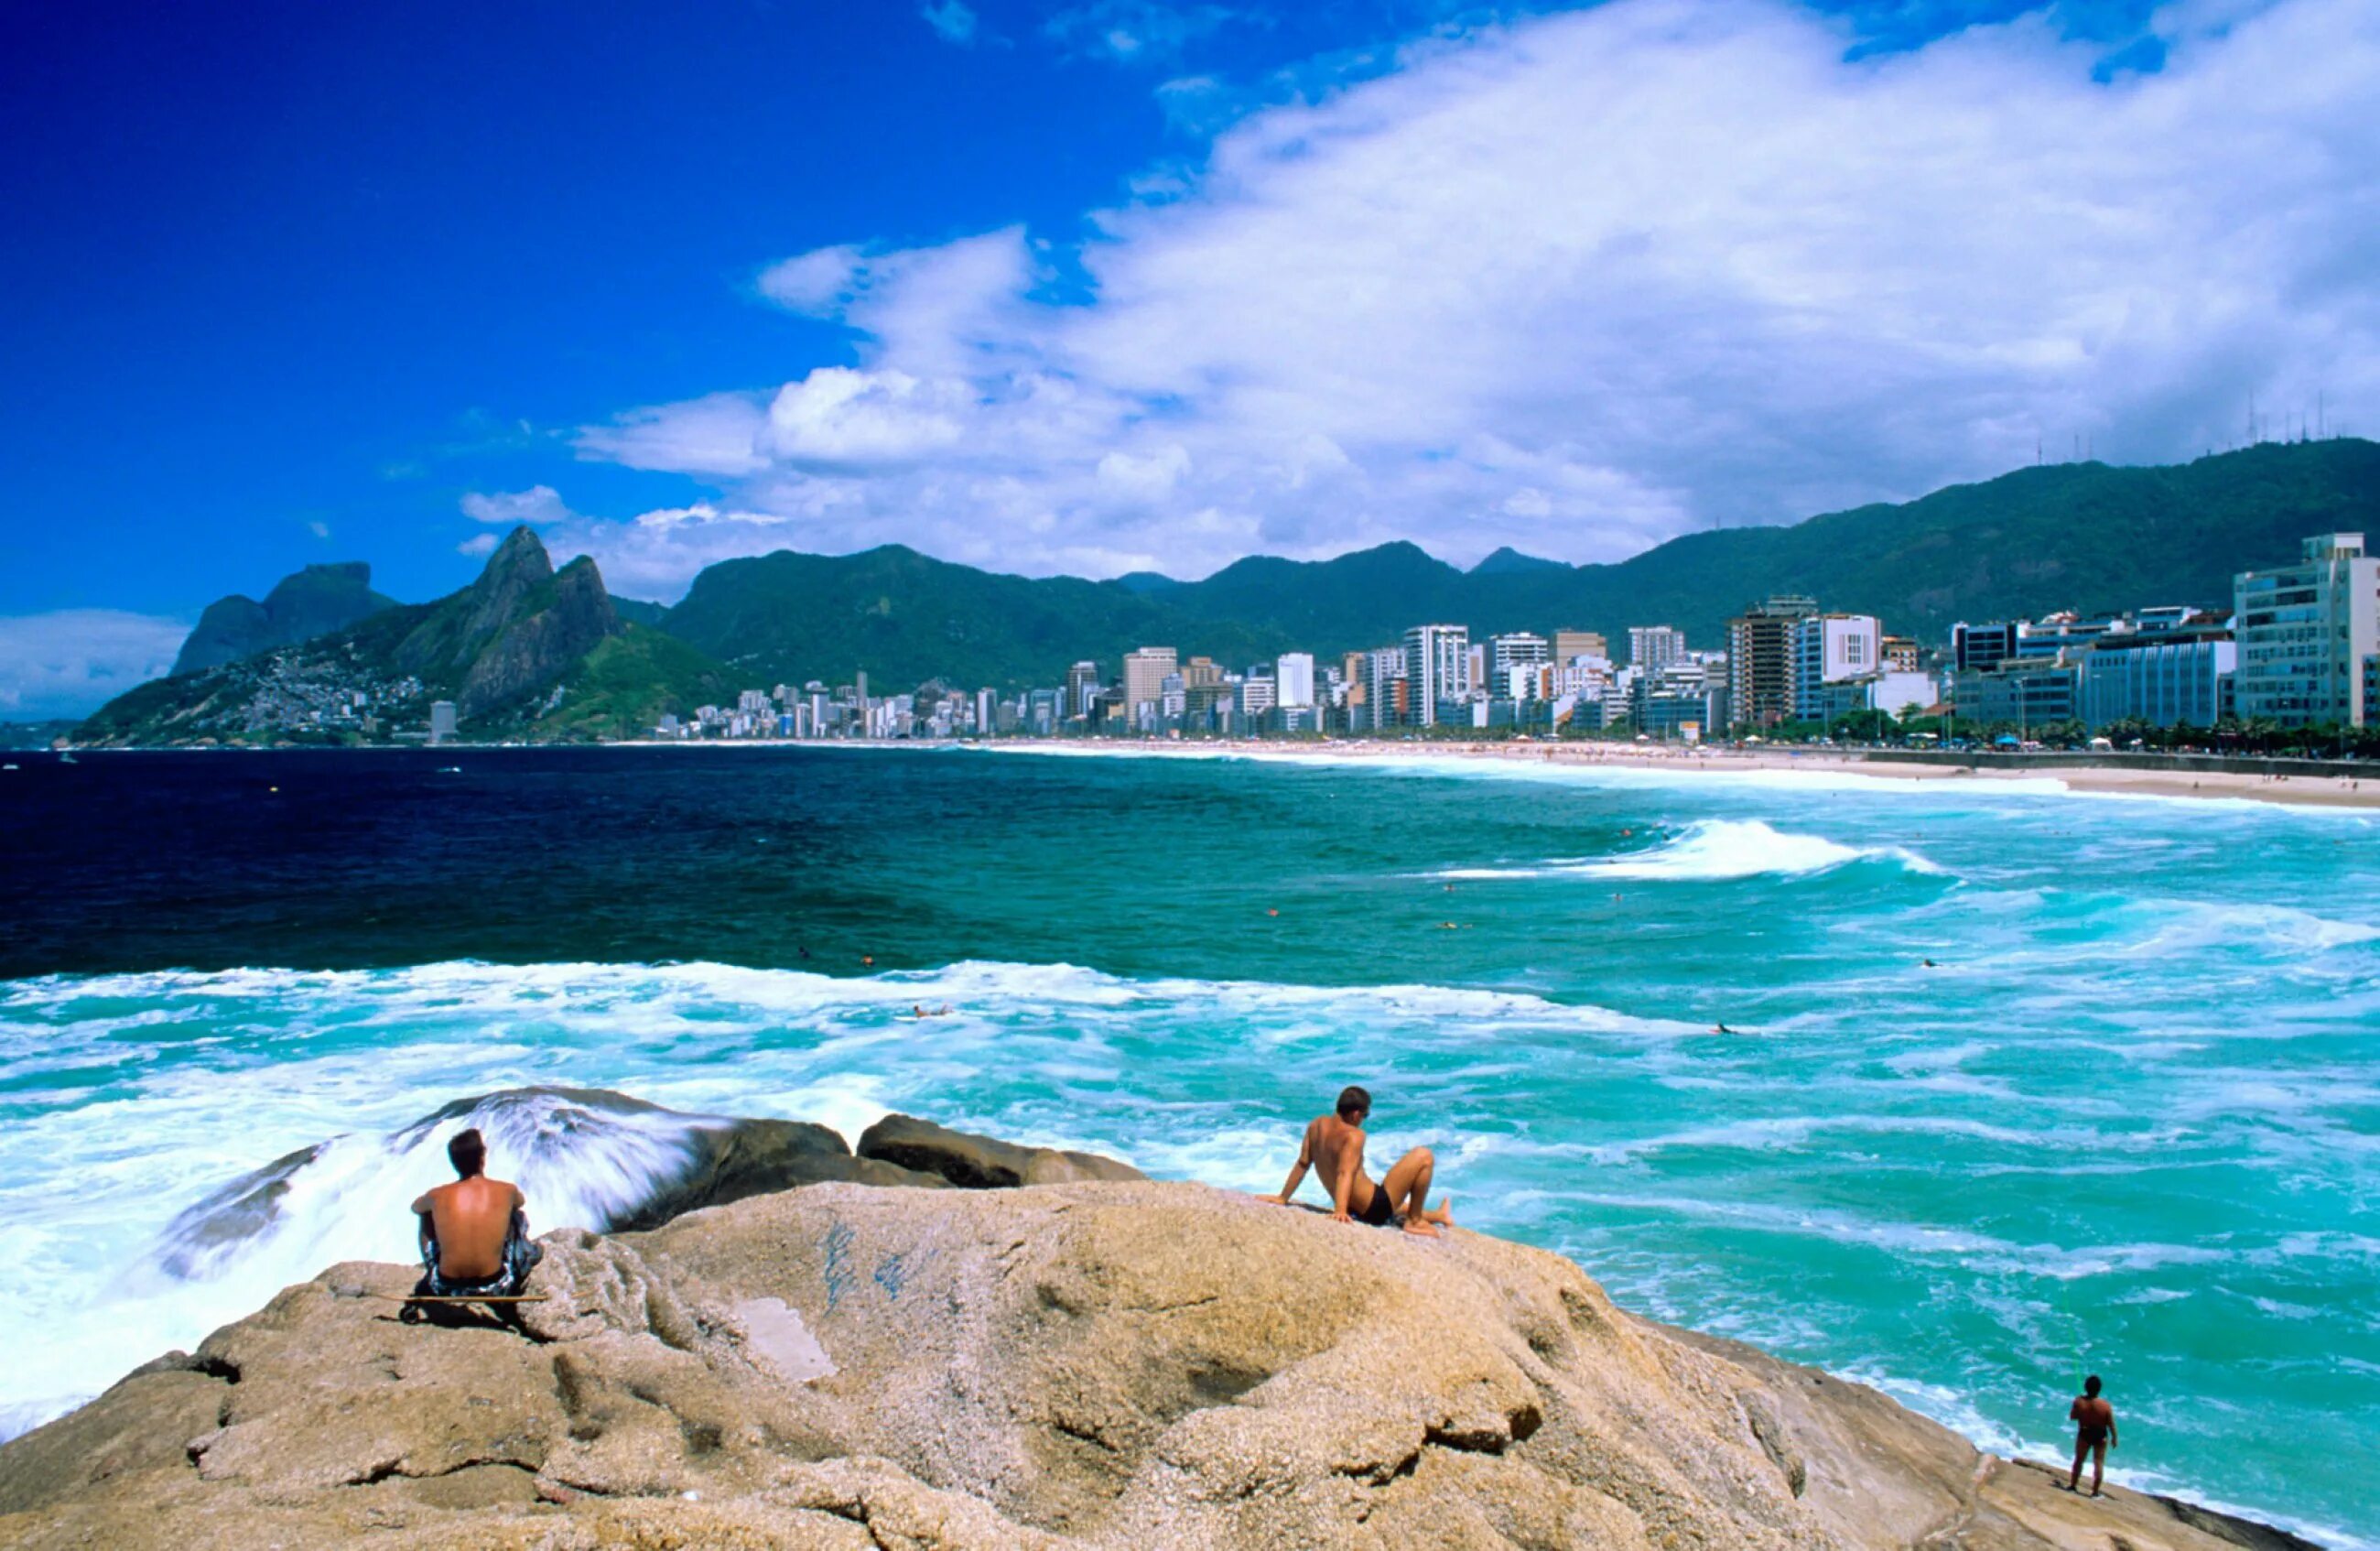 Средние осадки в бразилии. Климат Рио де Жанейро. Климат Бразилии. Климатический климат Рио де Жанейро. Рио де Жанейро климат пояс.